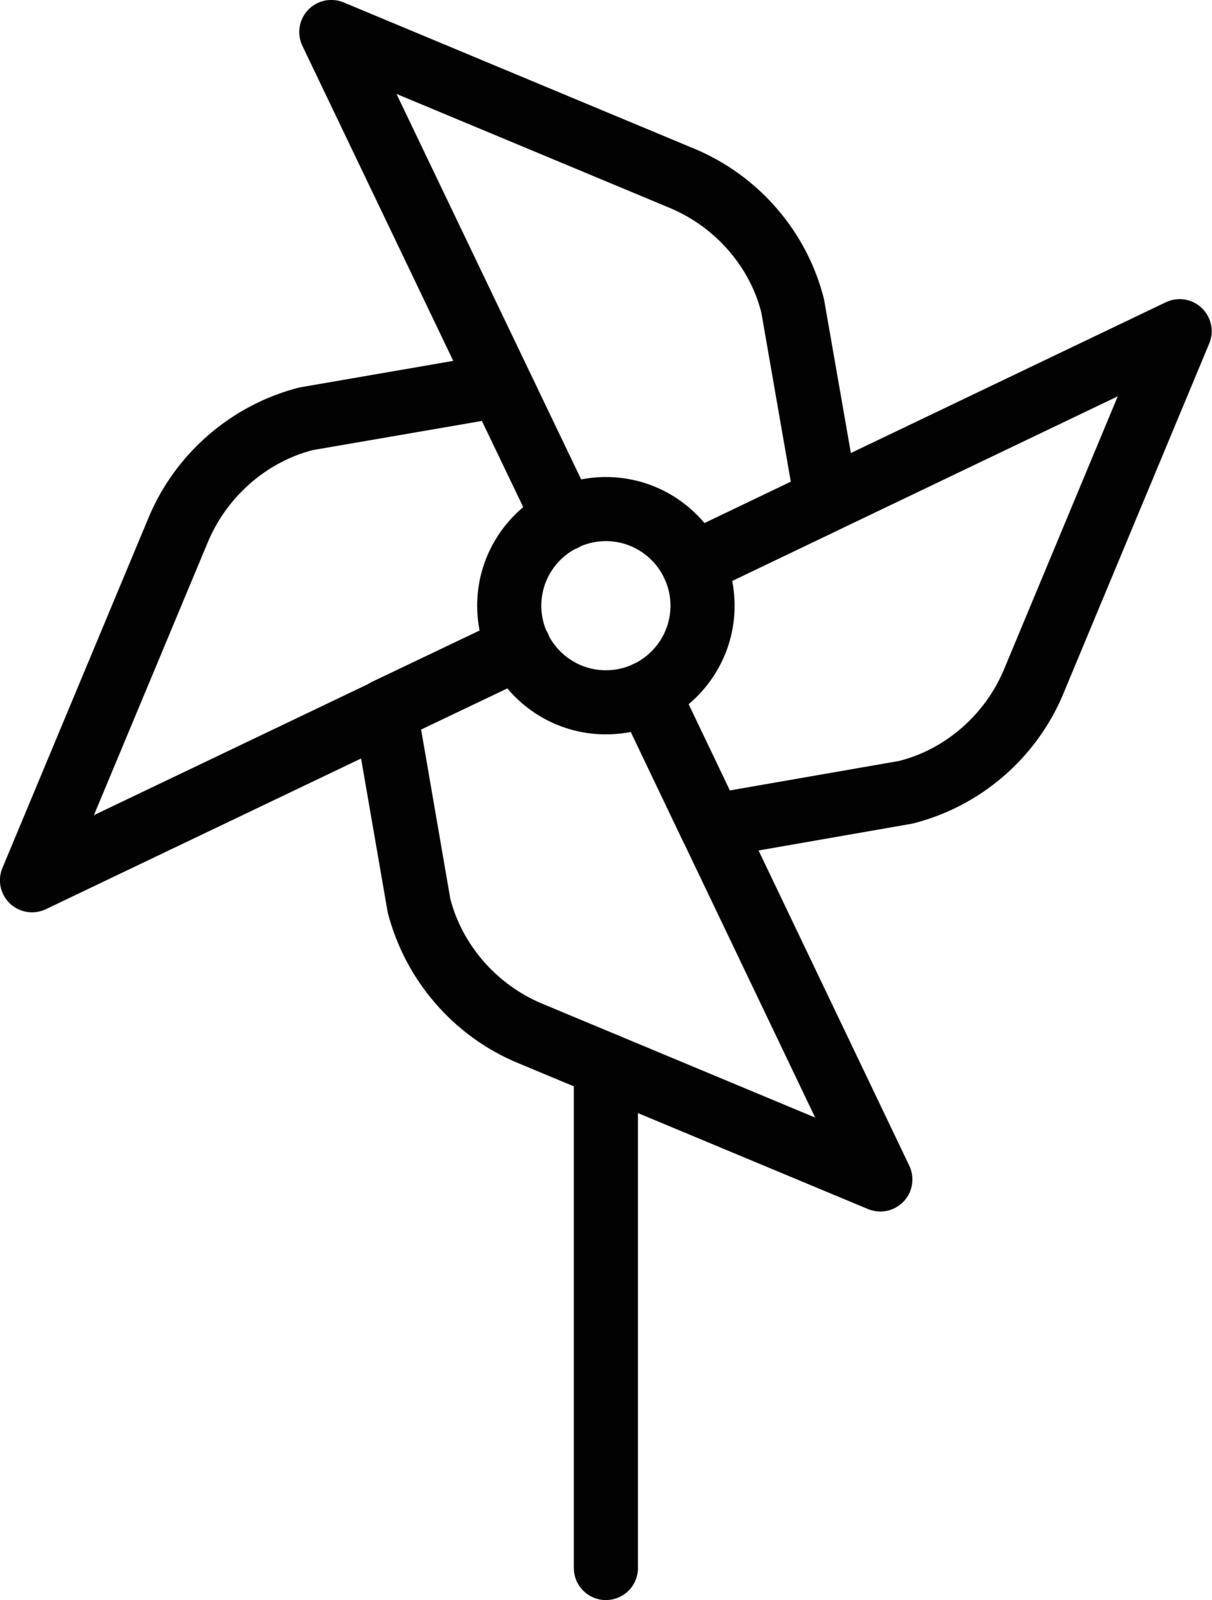 spring vector thin line icon